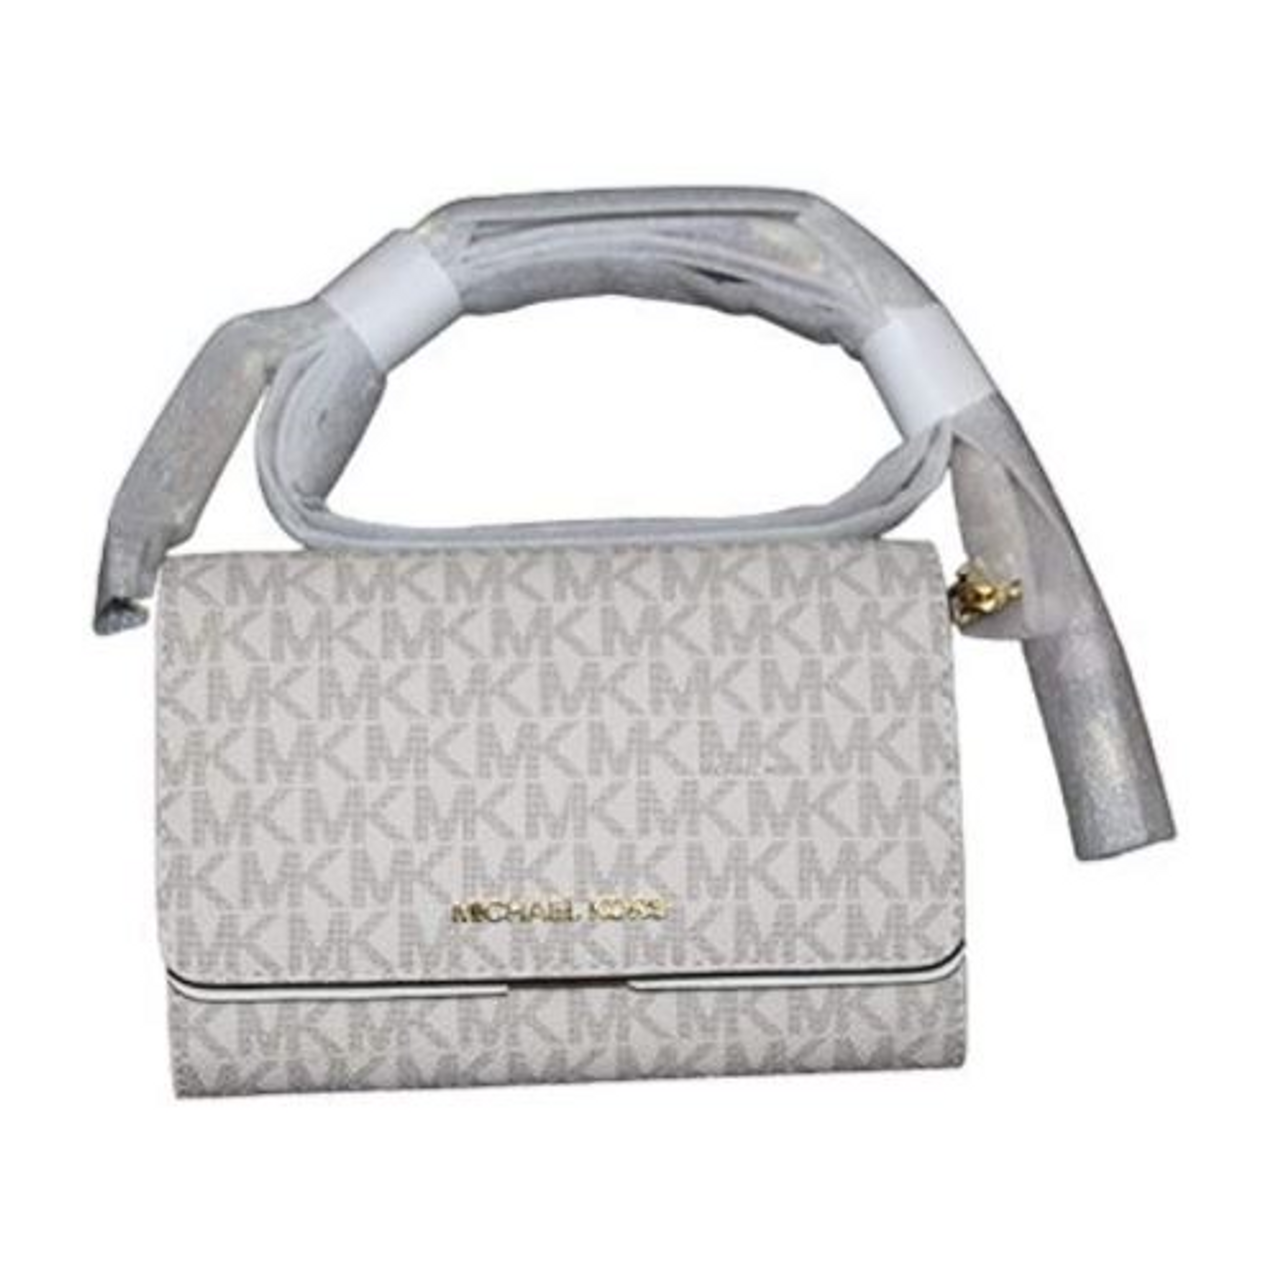 Michael Kors, Jet Set Travel Medium Saffiano Leather Multifunctional Phone Crossbody  Wallet Handbag Pearl Grey